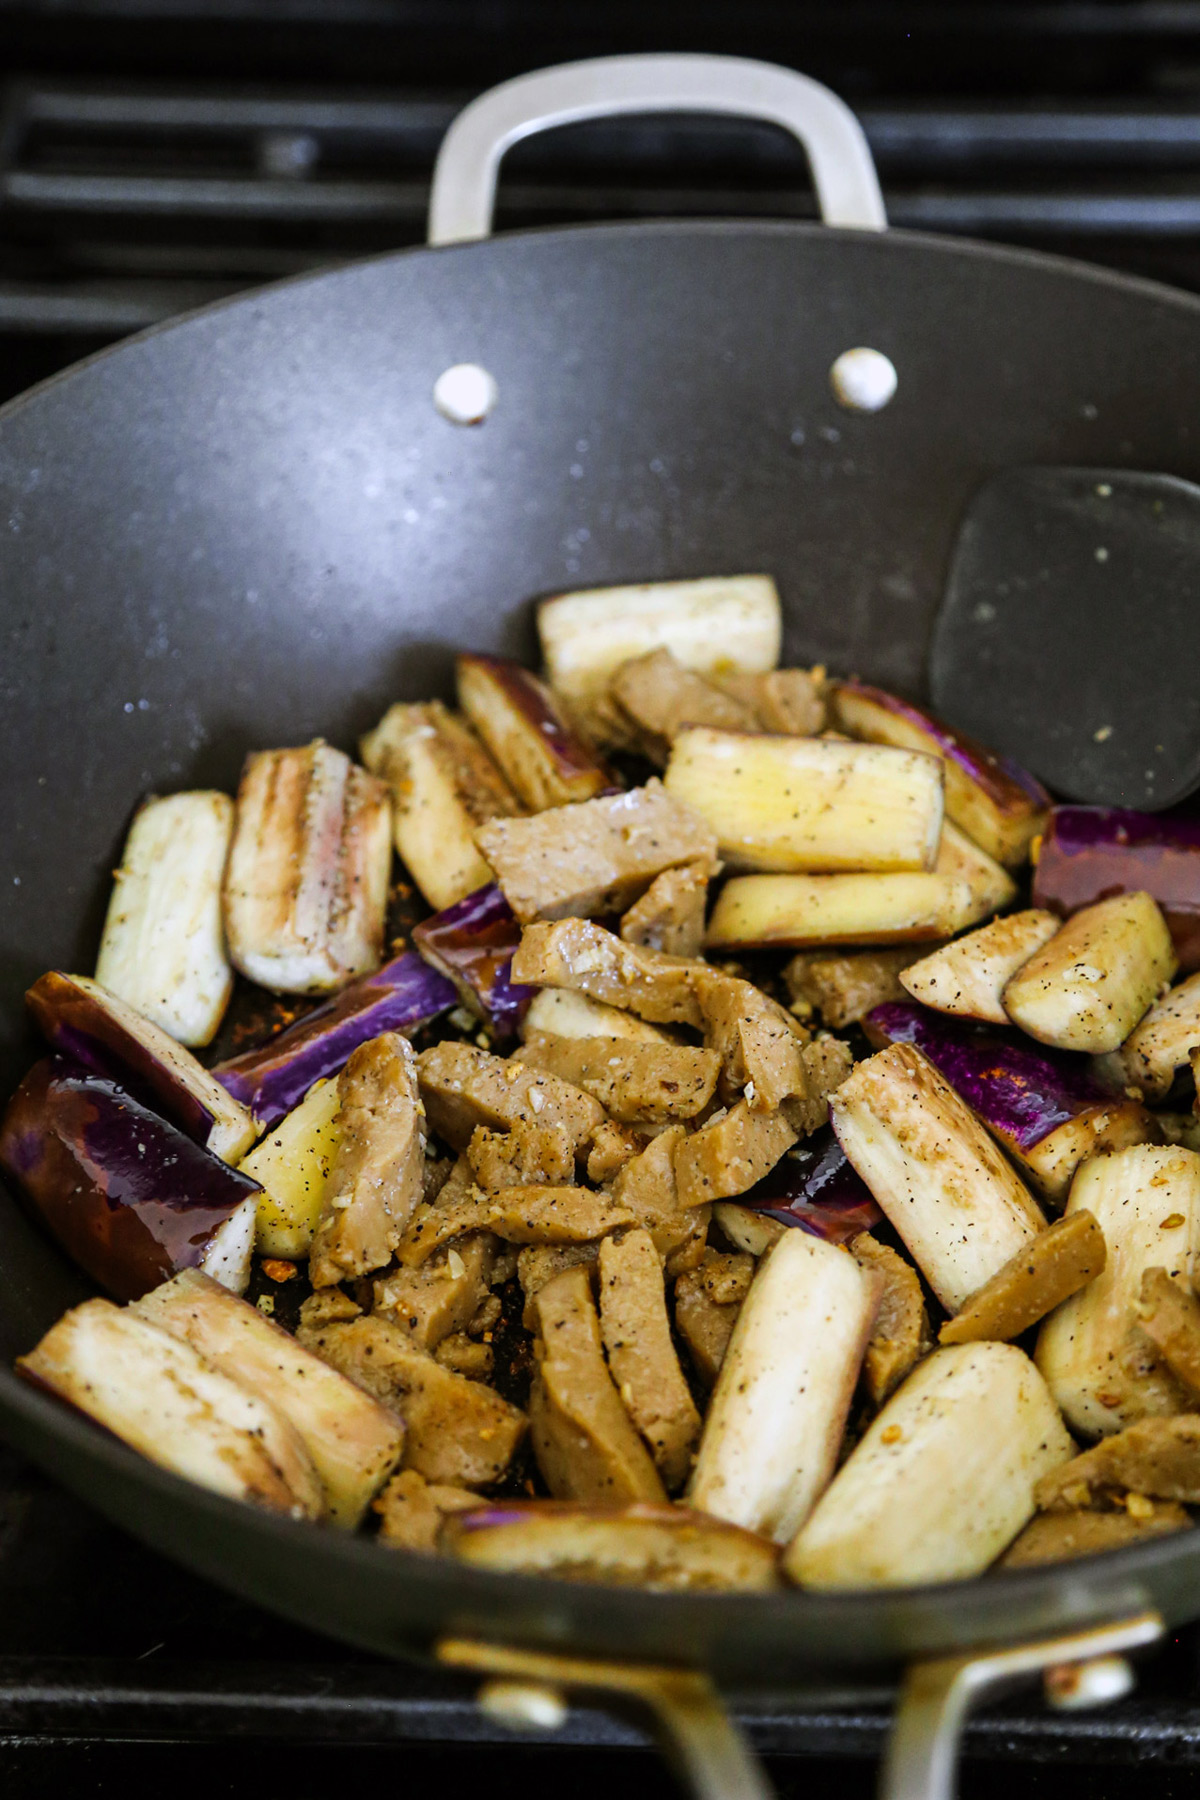 Stir fried eggplant with seitan